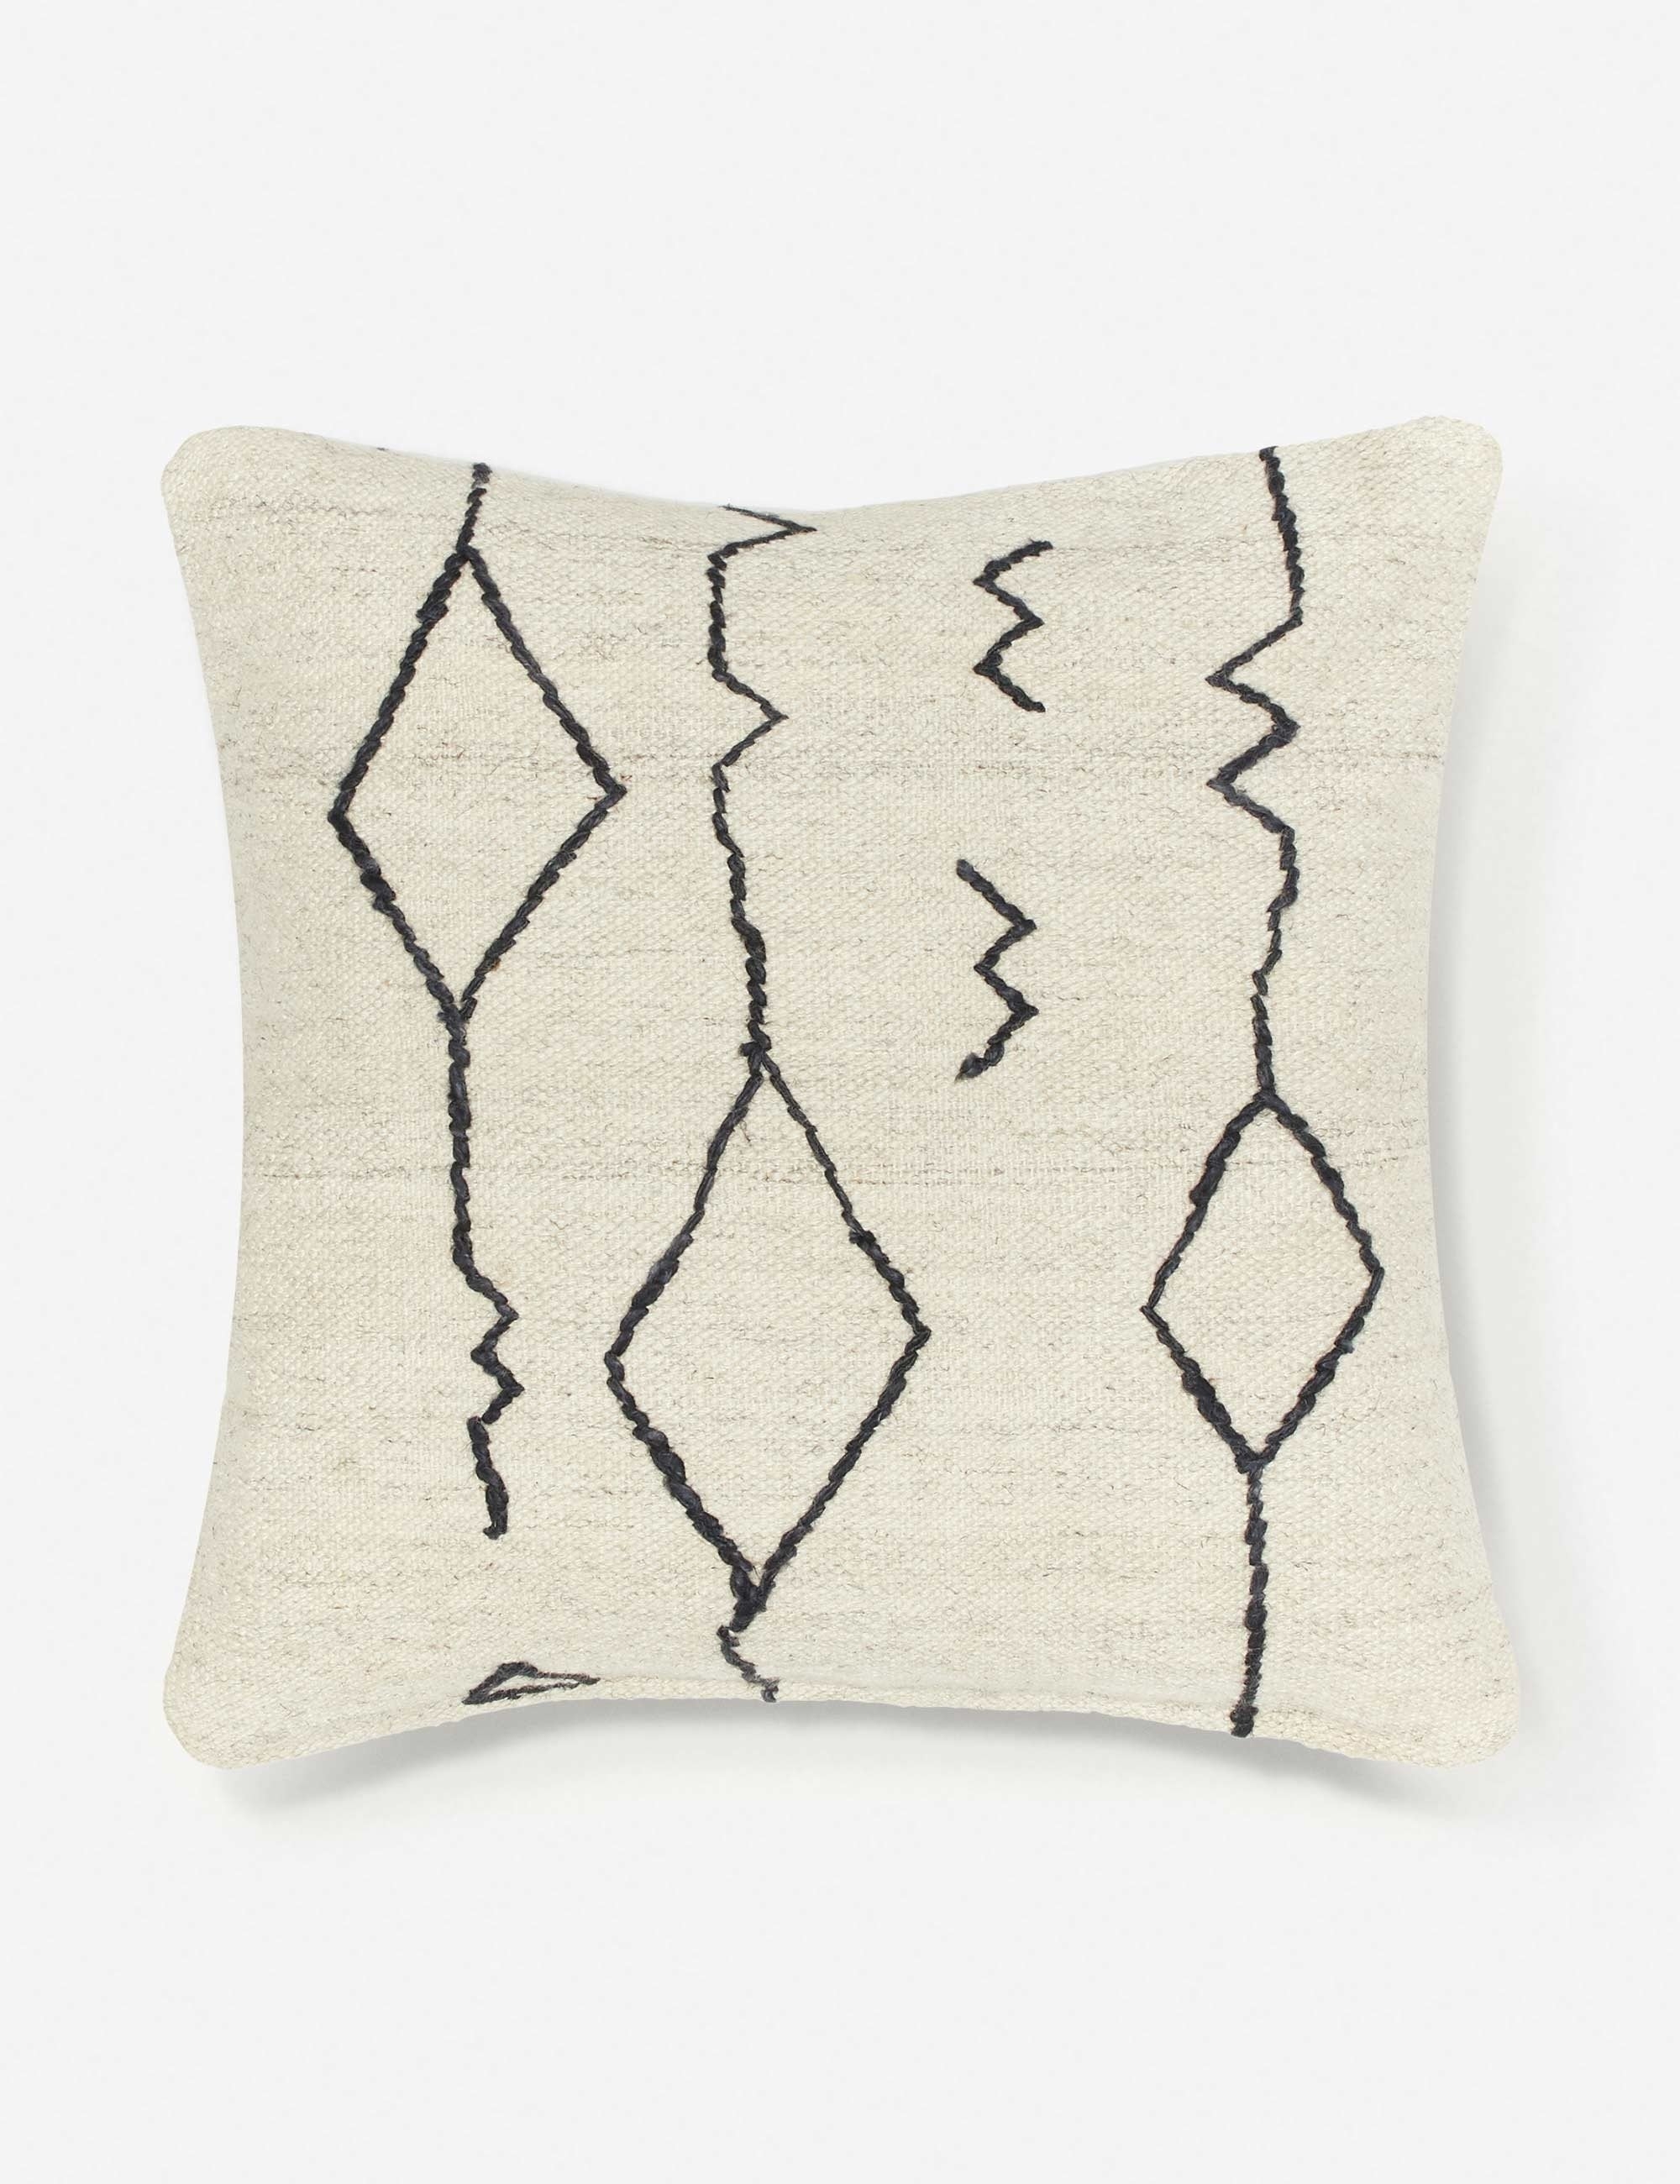 Moroccan Flatweave Pillow By Sarah Sherman Samuel - Black and Natural / 12" x 20" - Image 6